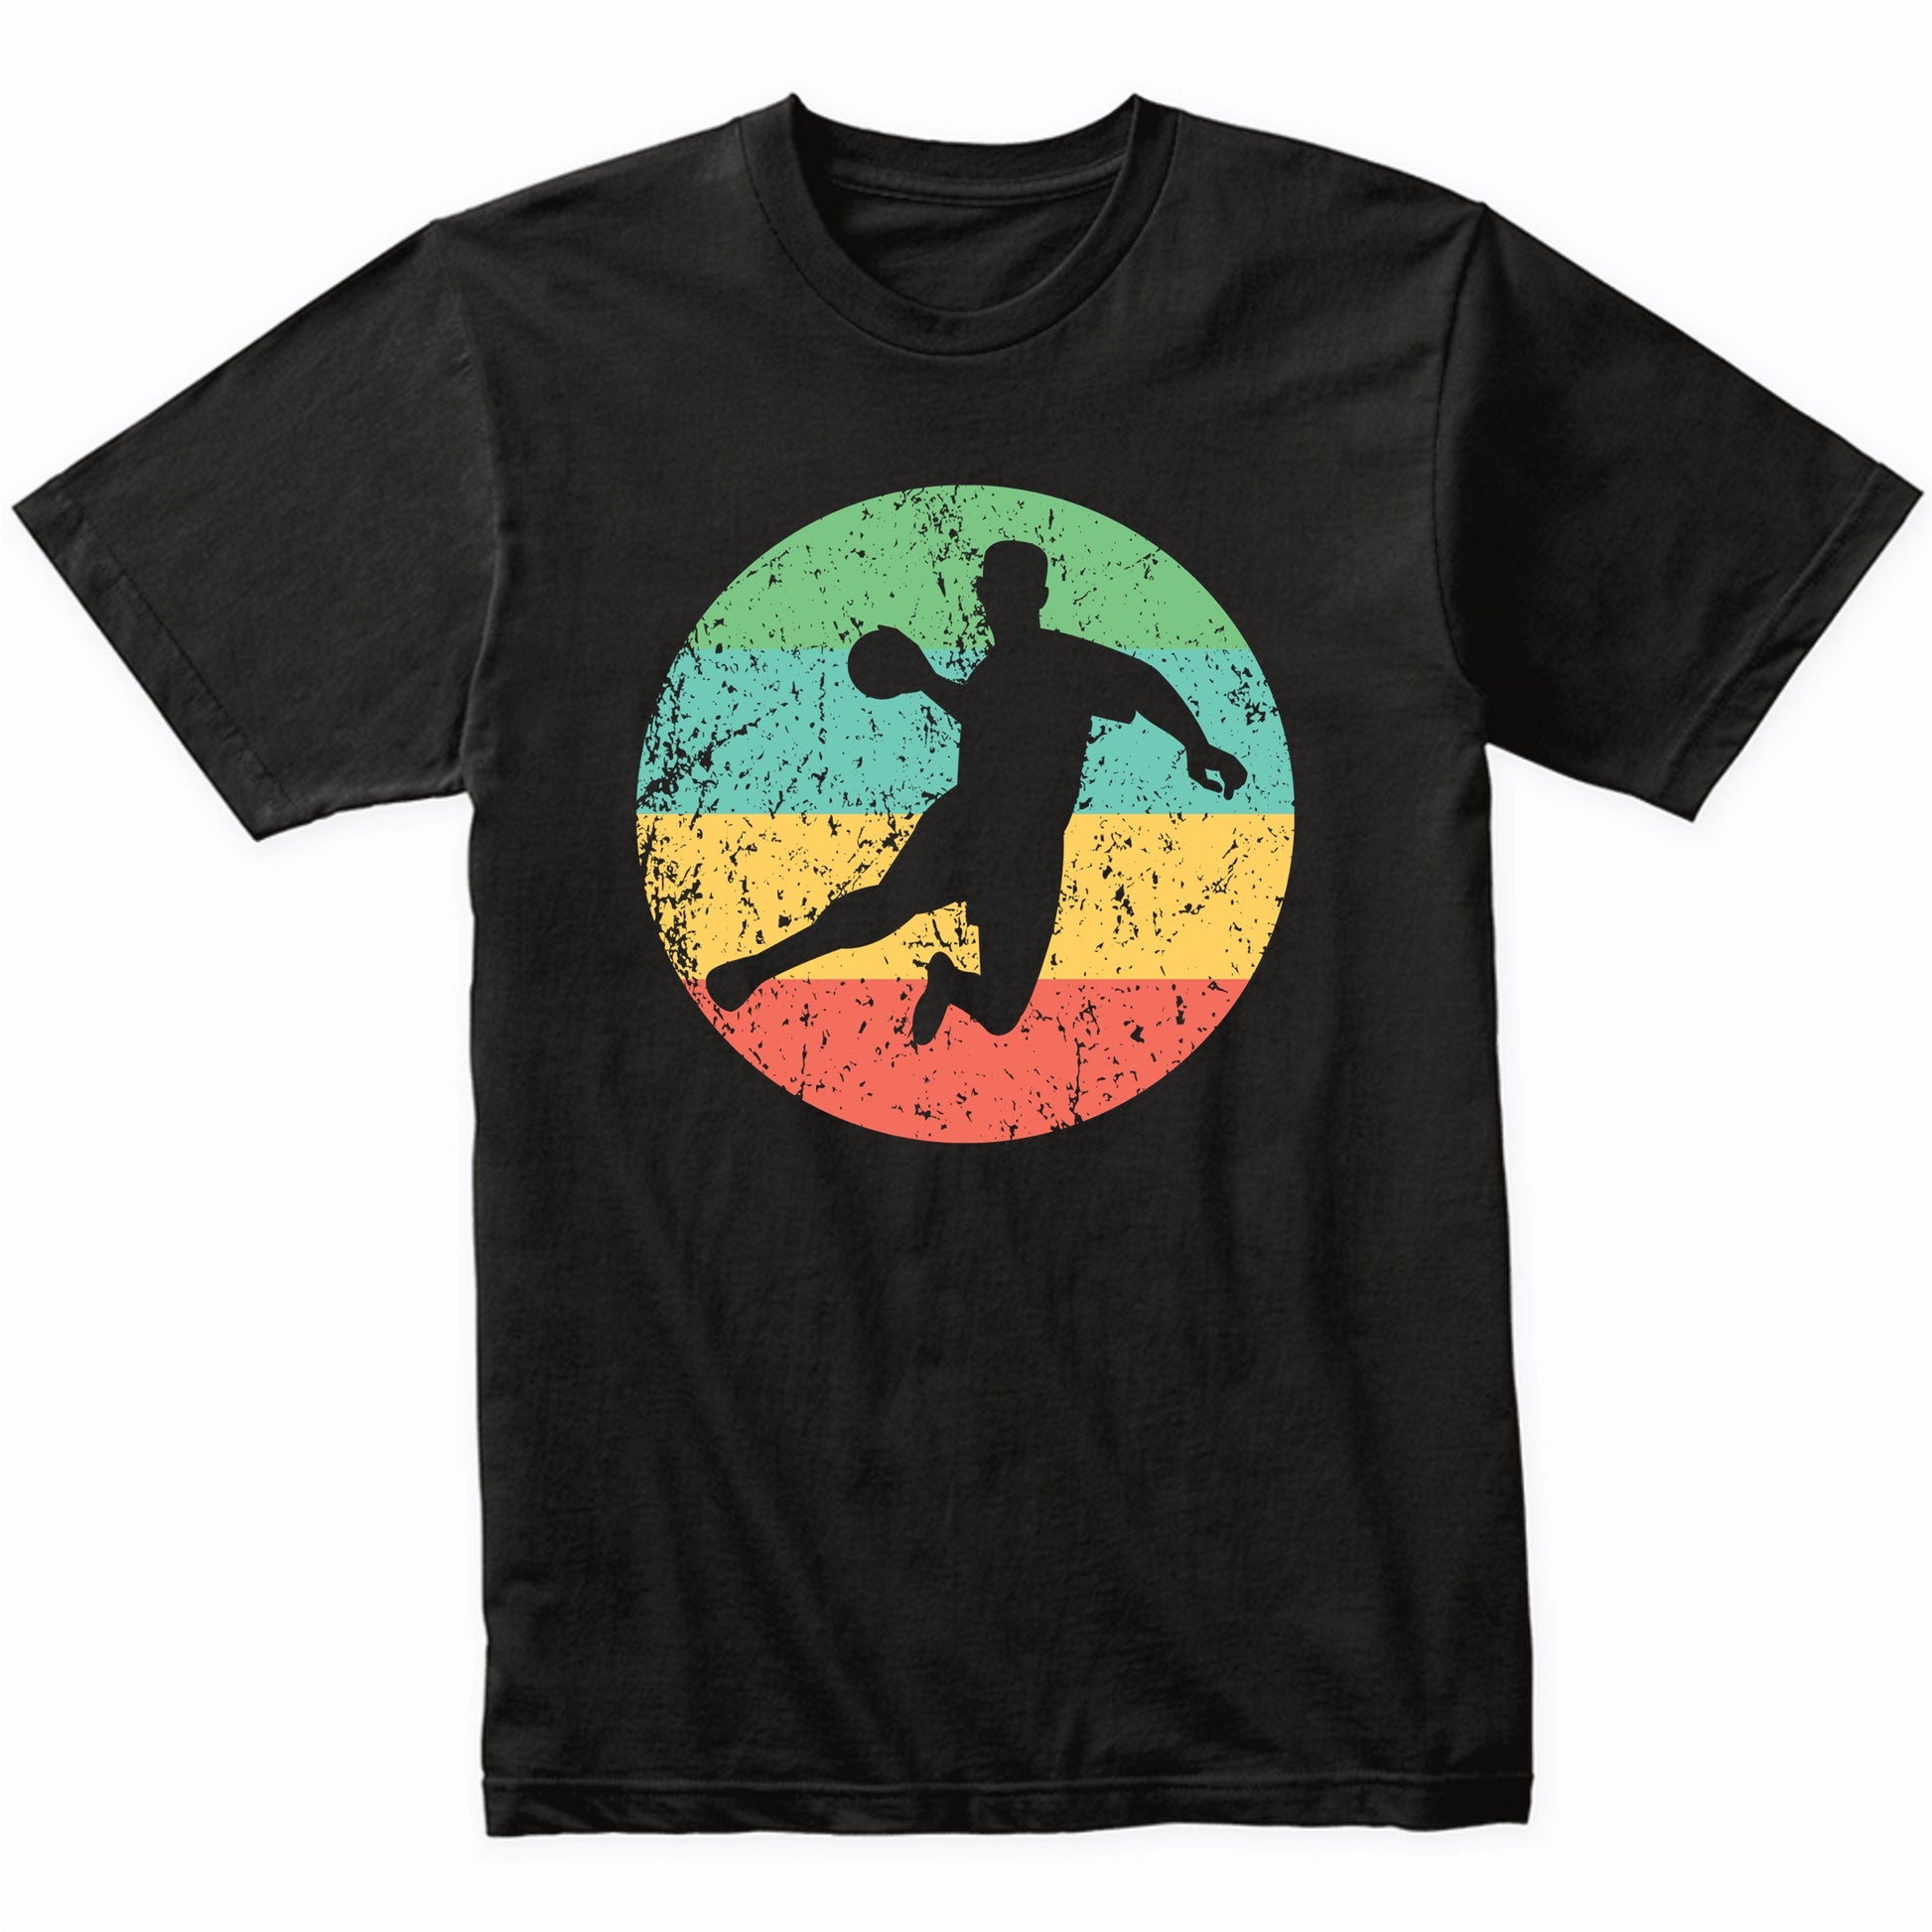 Dodgeball Shirt - Vintage Retro Dodgeball Player T-Shirt